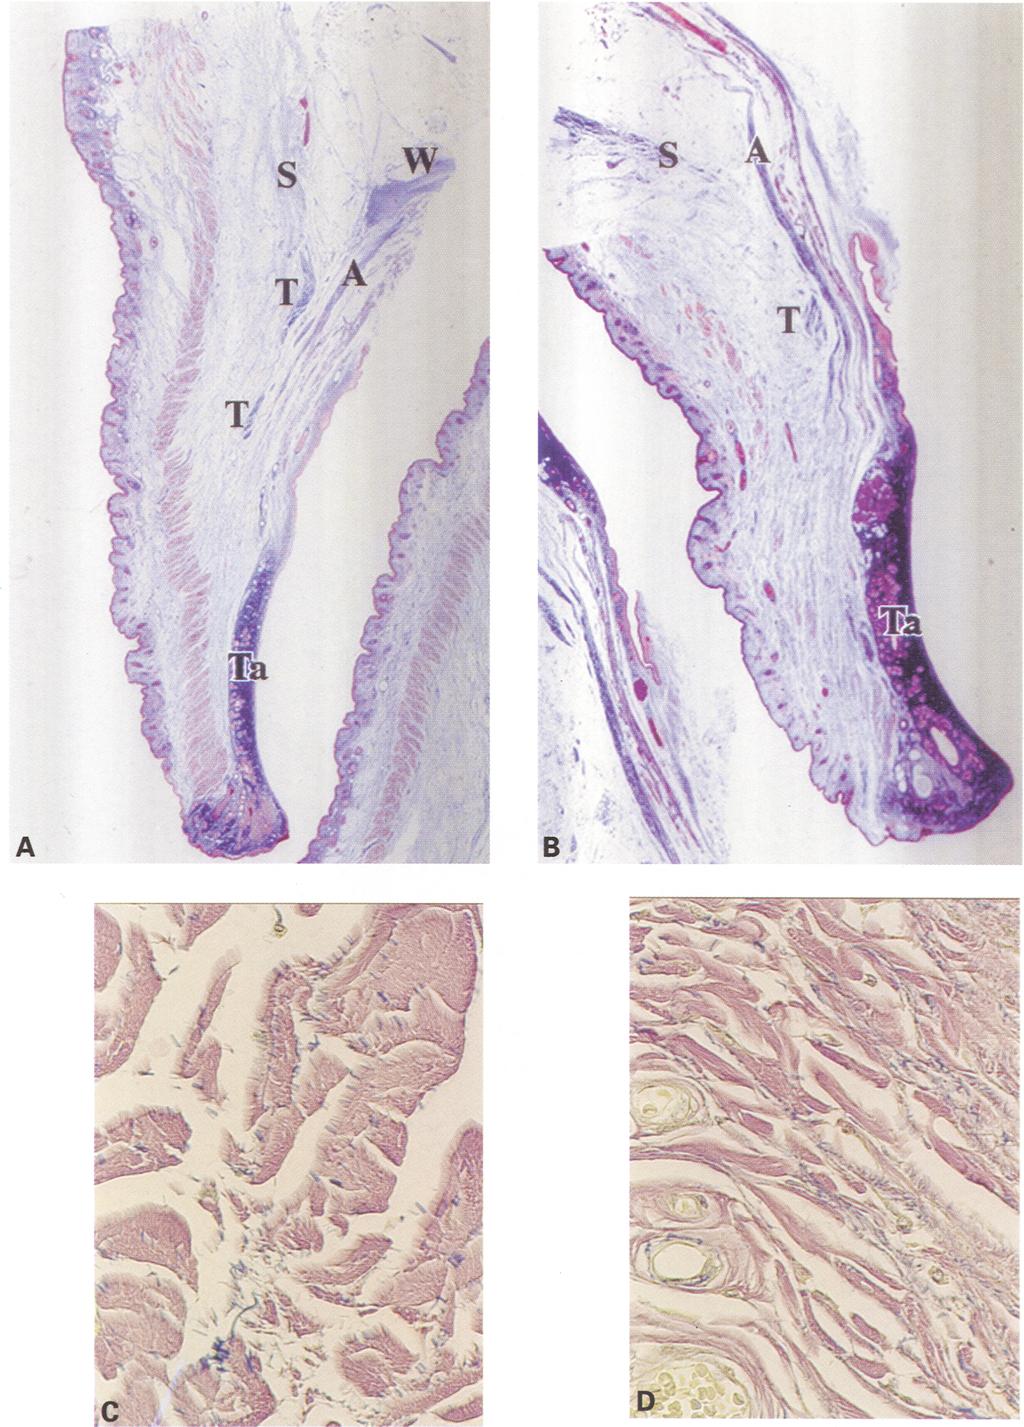 (S: orbital septum, A: levator aponeurosis, W: Whitnall's ligament, Ta: tarsus, T: lower-positioned transverse ligamentous tissue.